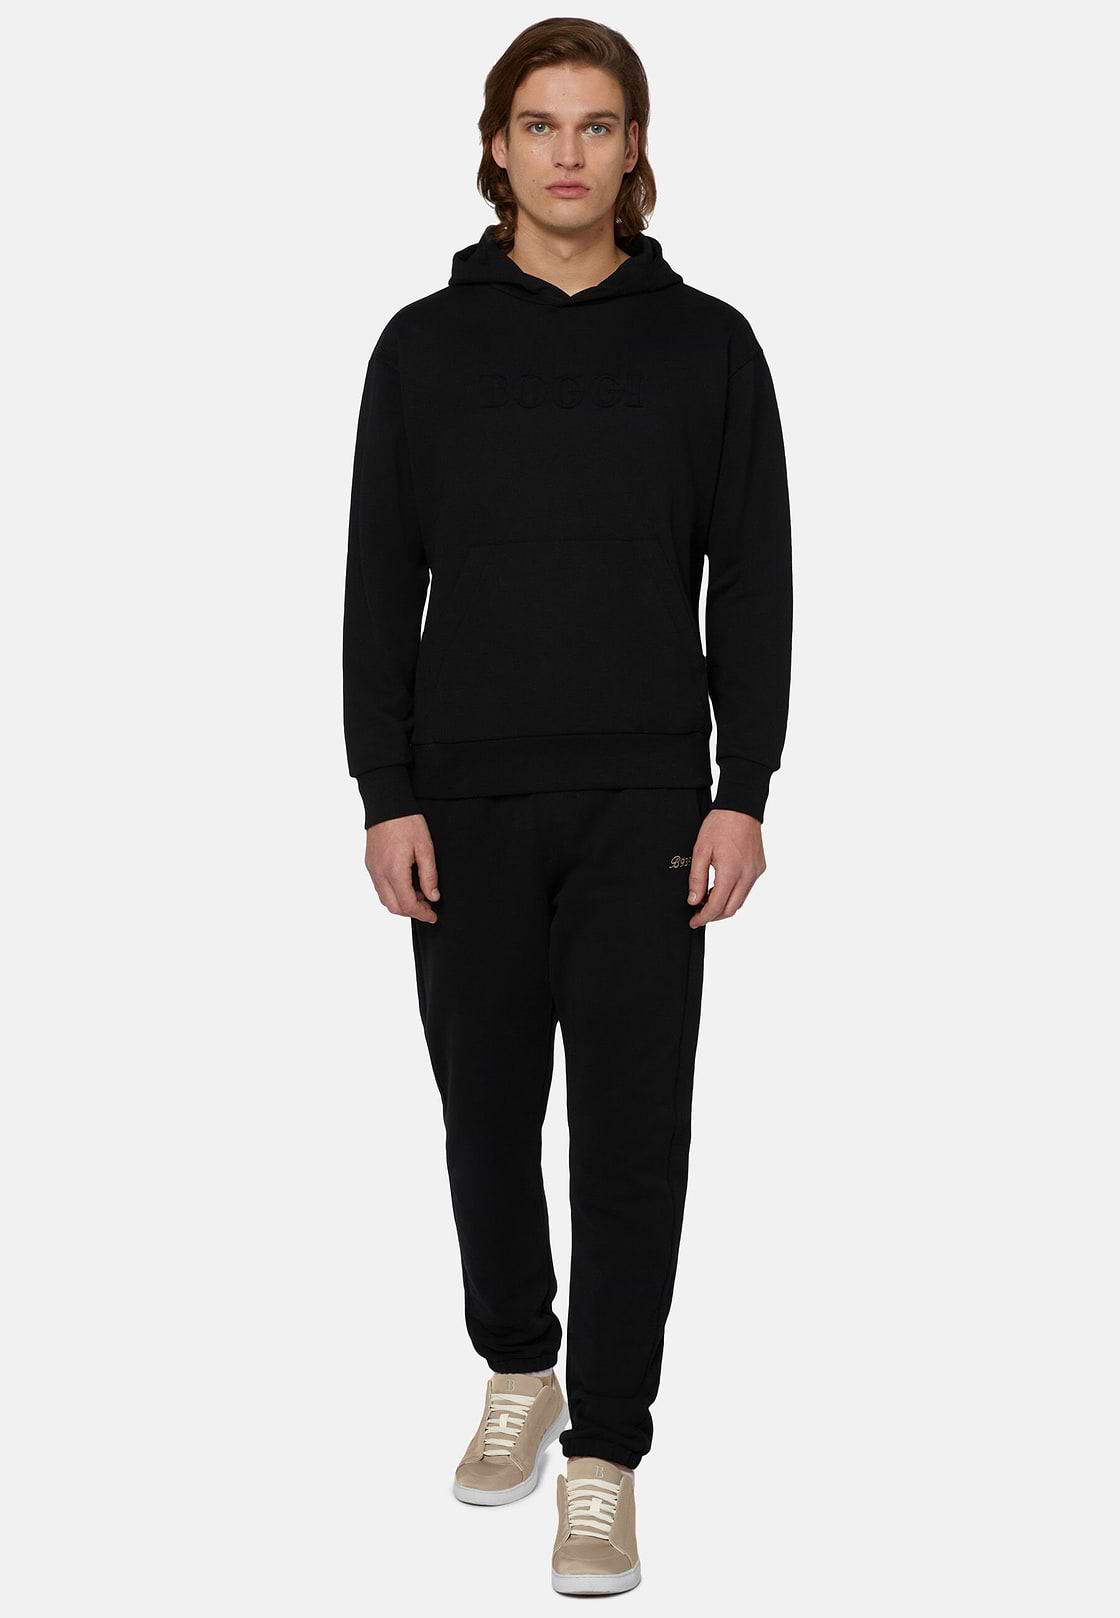 Hooded Sweatshirt in Cotton, Black, hi-res